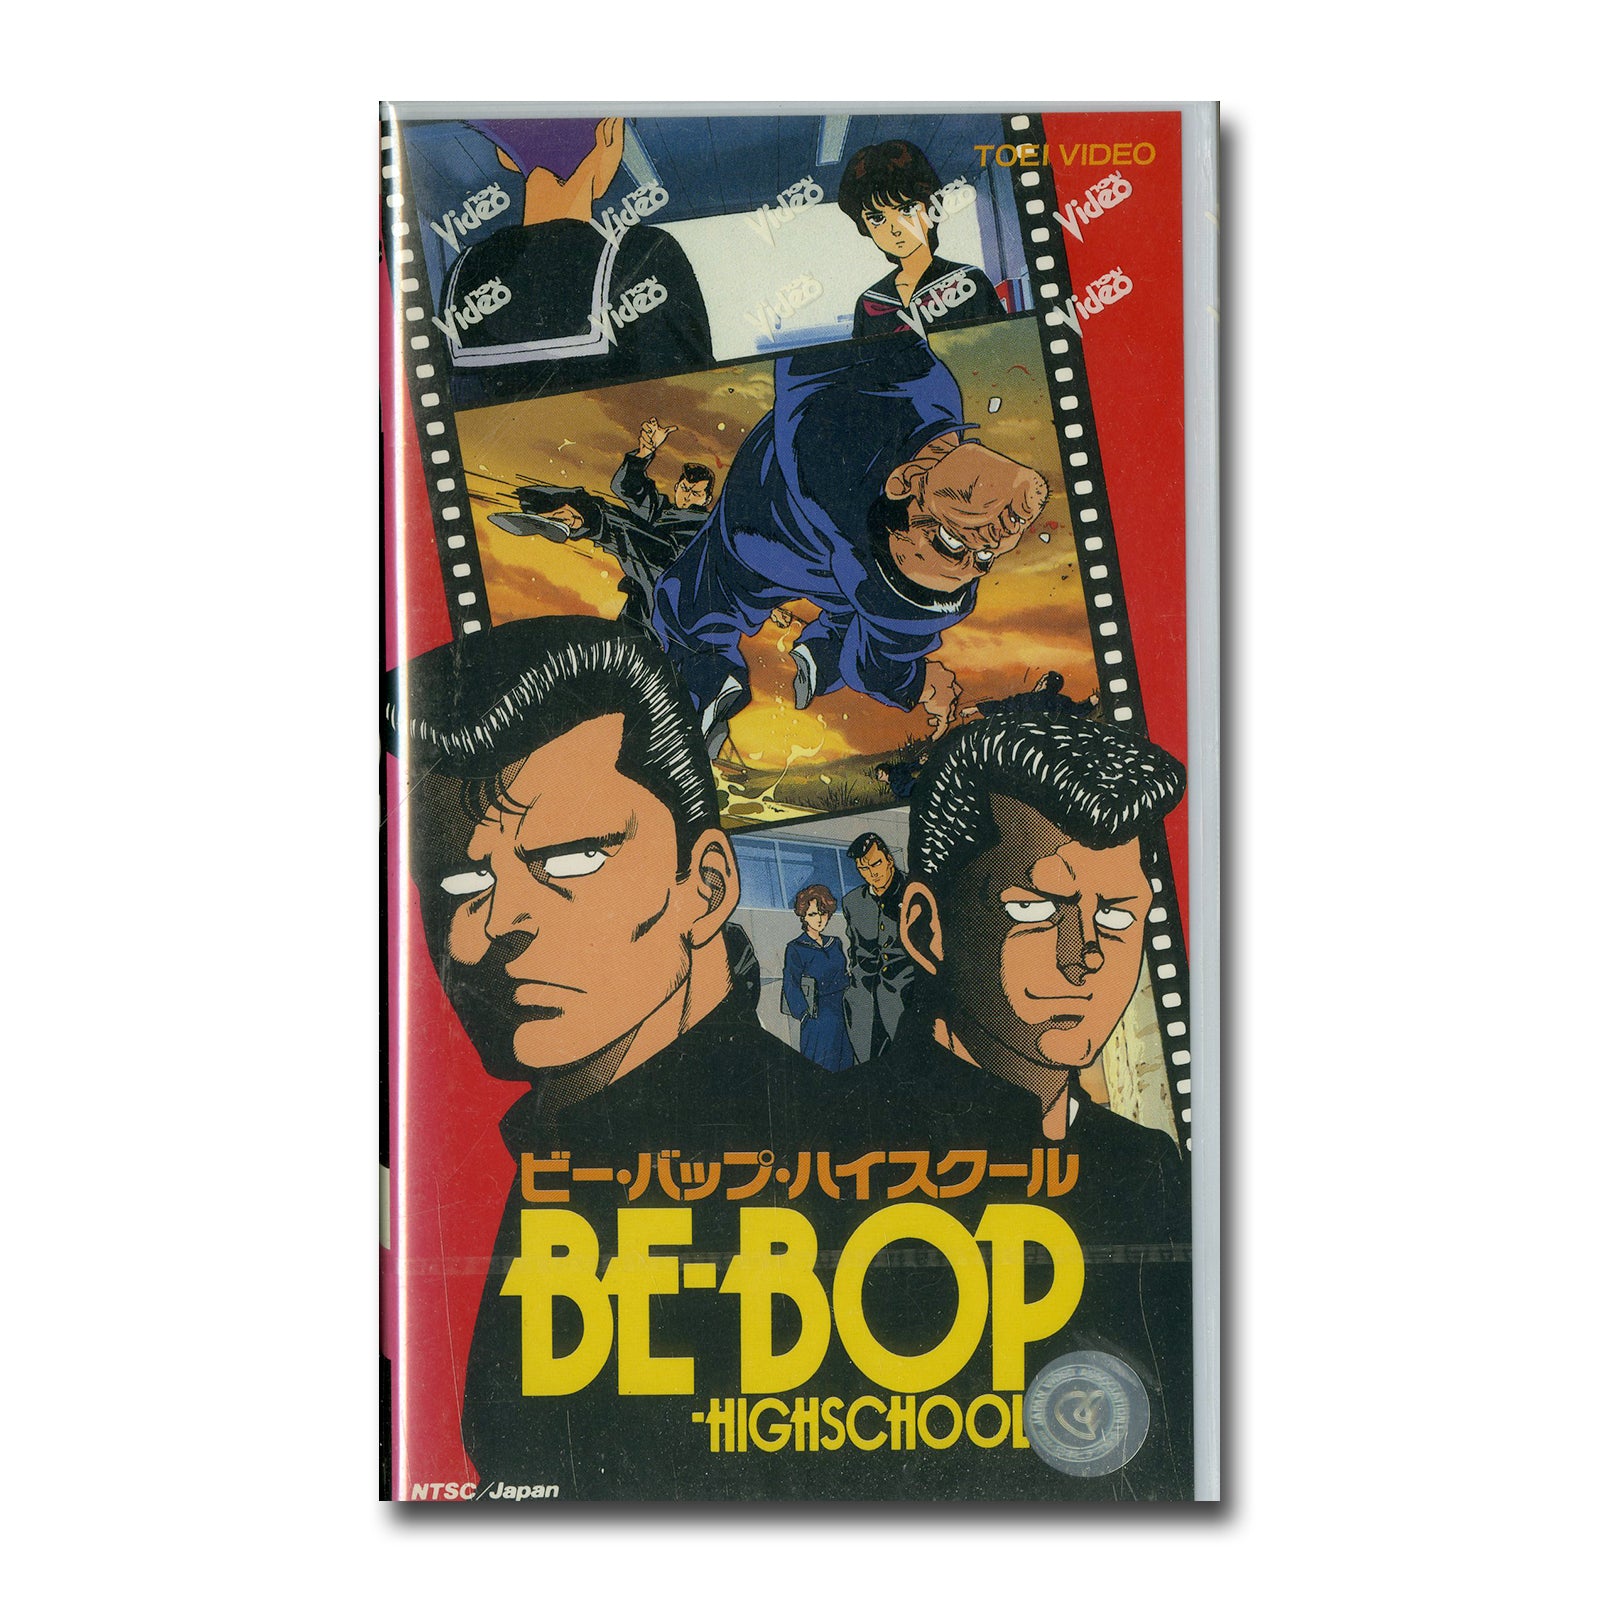 BE BOP HIGH SCHOOL ビー・バップ・ハイスクール 東映Vアニメ [VHS